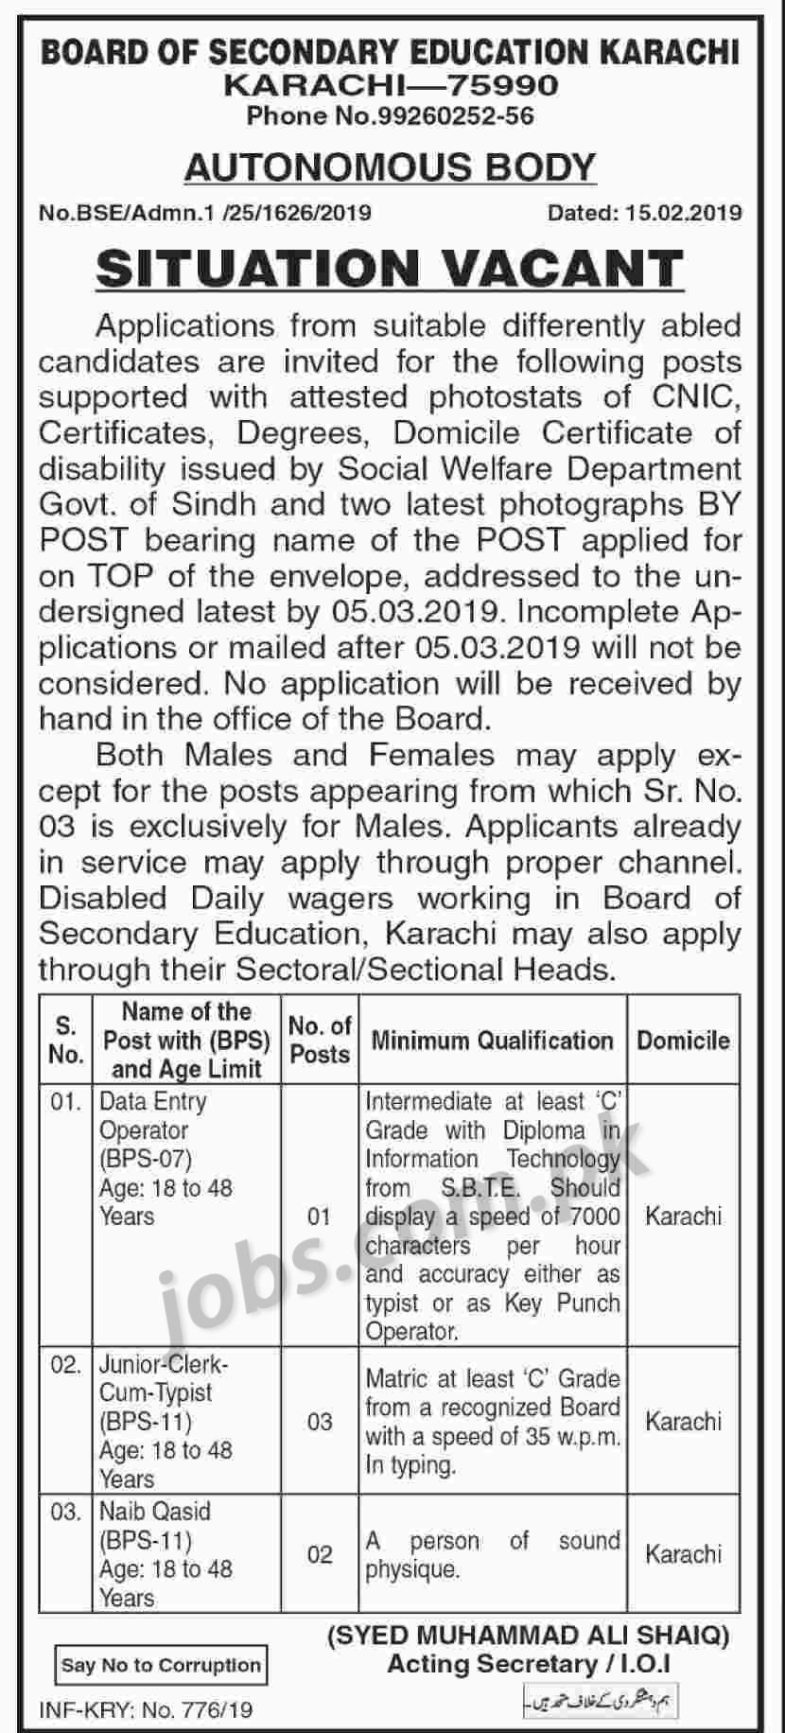 Board of Secondary Education Karachi (BSEK) Jobs 2019 for 6+ Junior Clerks, Data Entry Operator & Naib Qasid